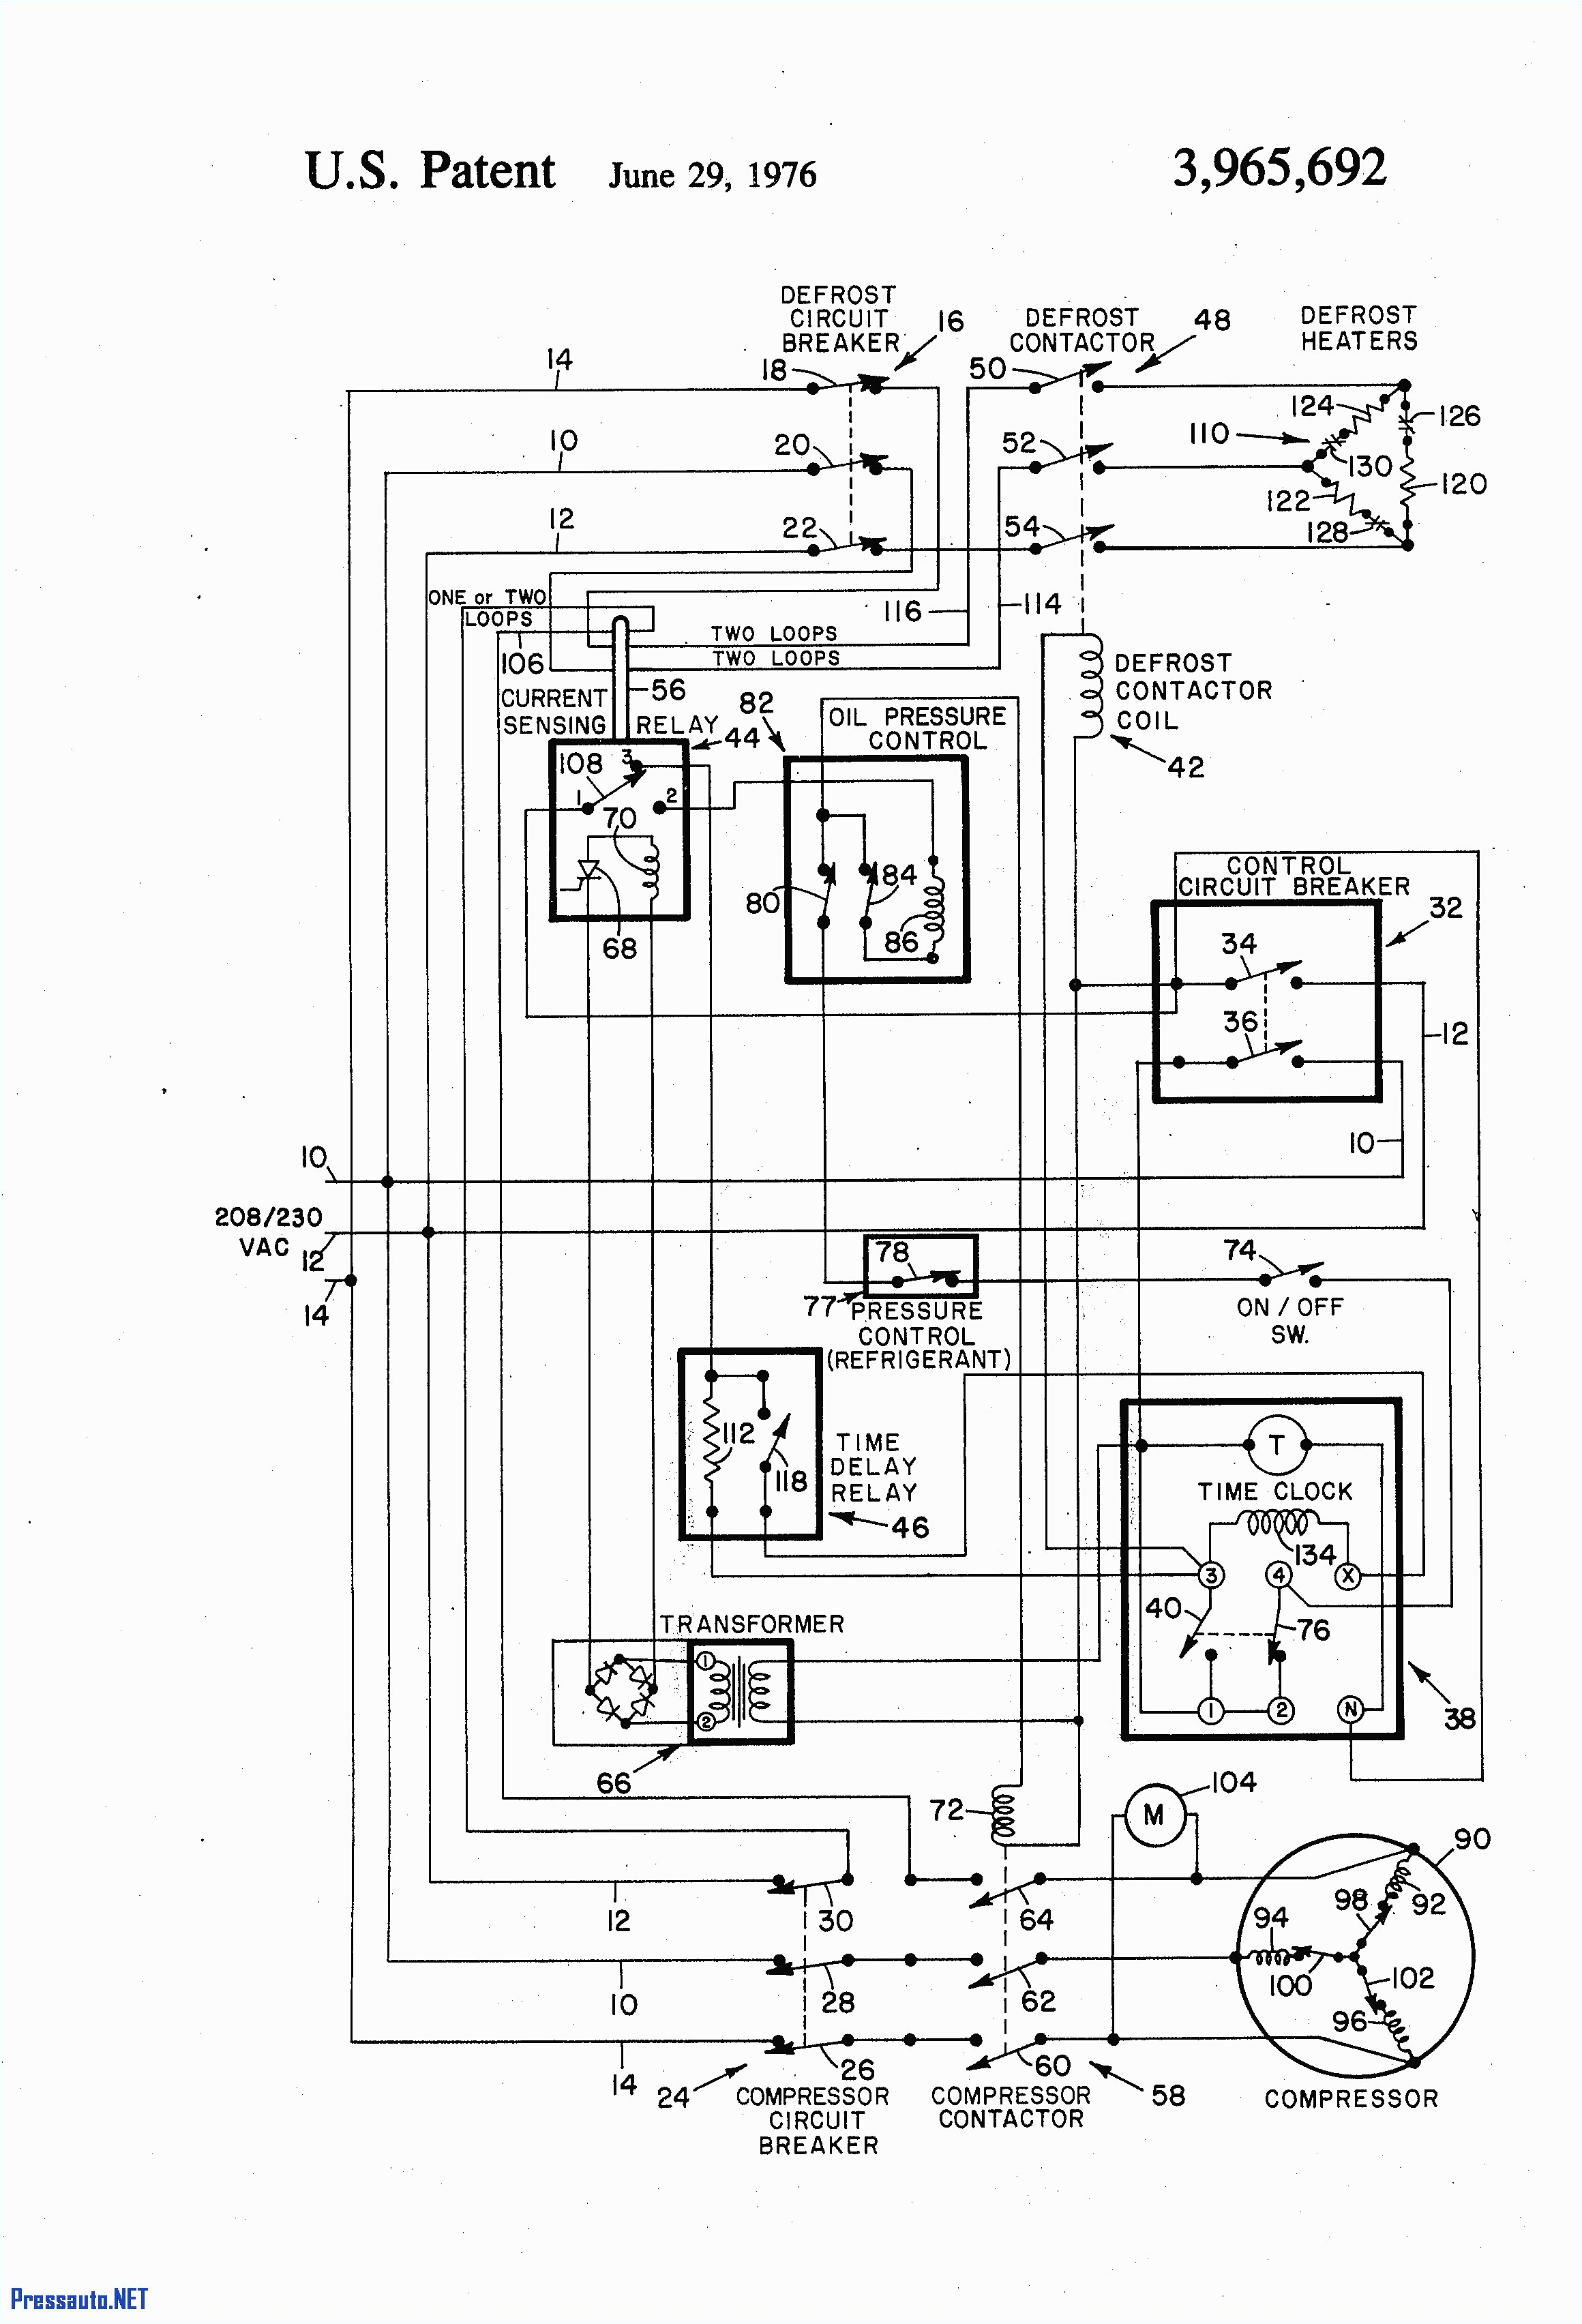 abb wiring diagram wiring diagram dataabb wiring diagram wiring diagram abb acs550 wiring diagram abb drive